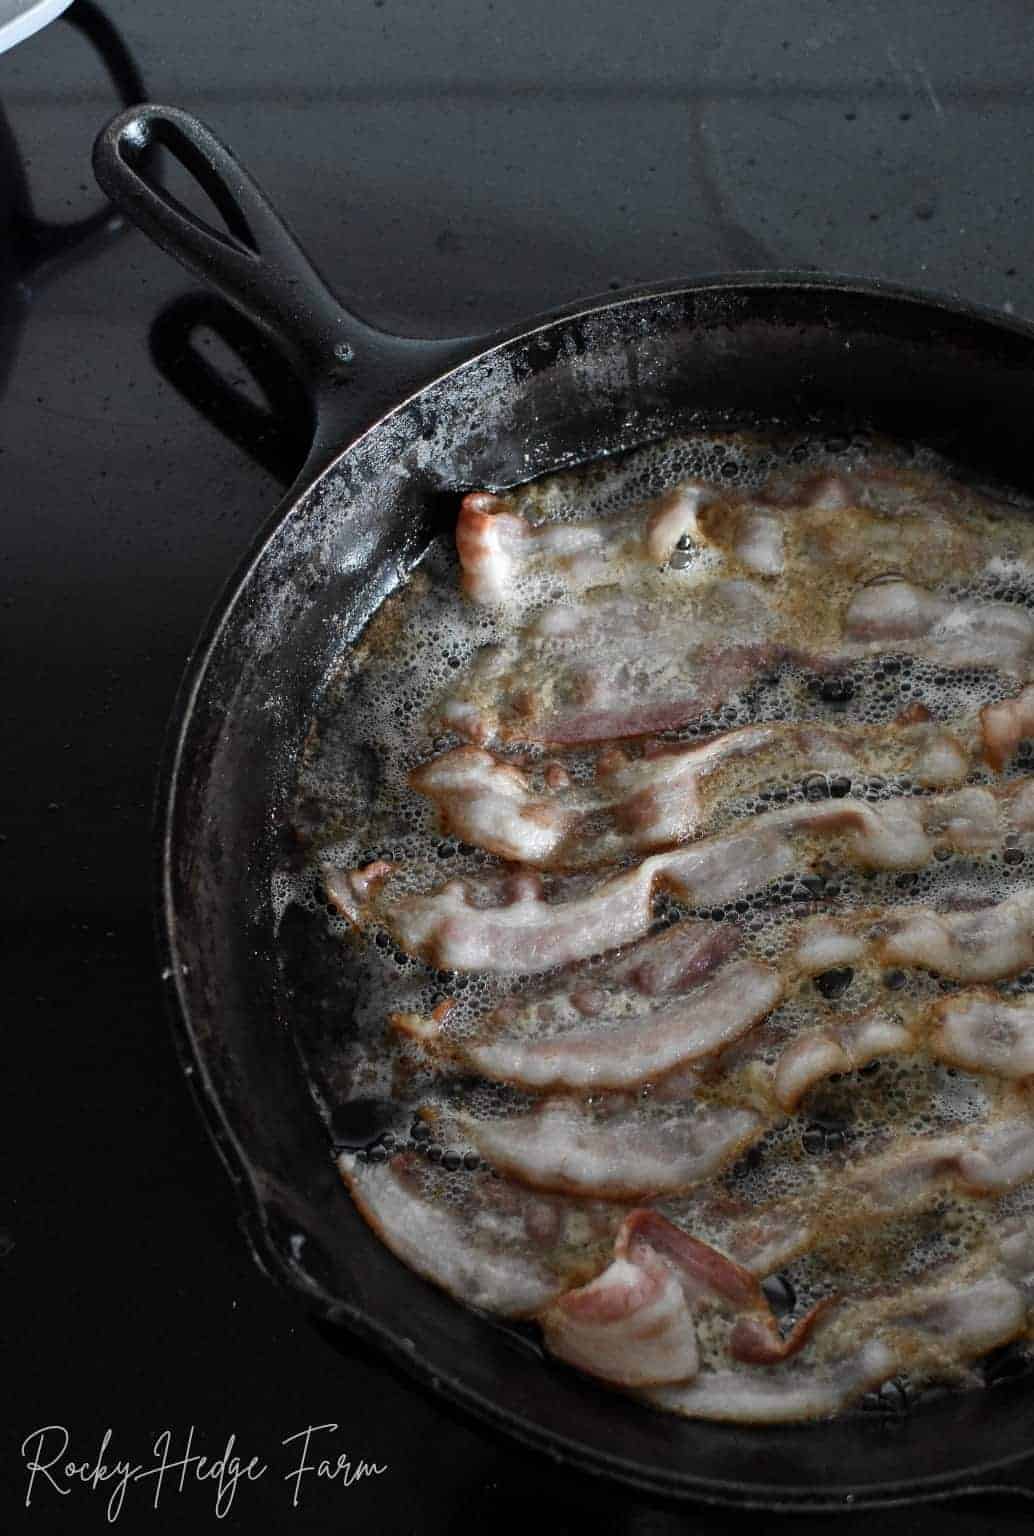 https://erdtknyop8g.exactdn.com/wp-content/uploads/2021/06/cooking-bacon-cast-iron-.jpg?strip=all&lossy=1&ssl=1